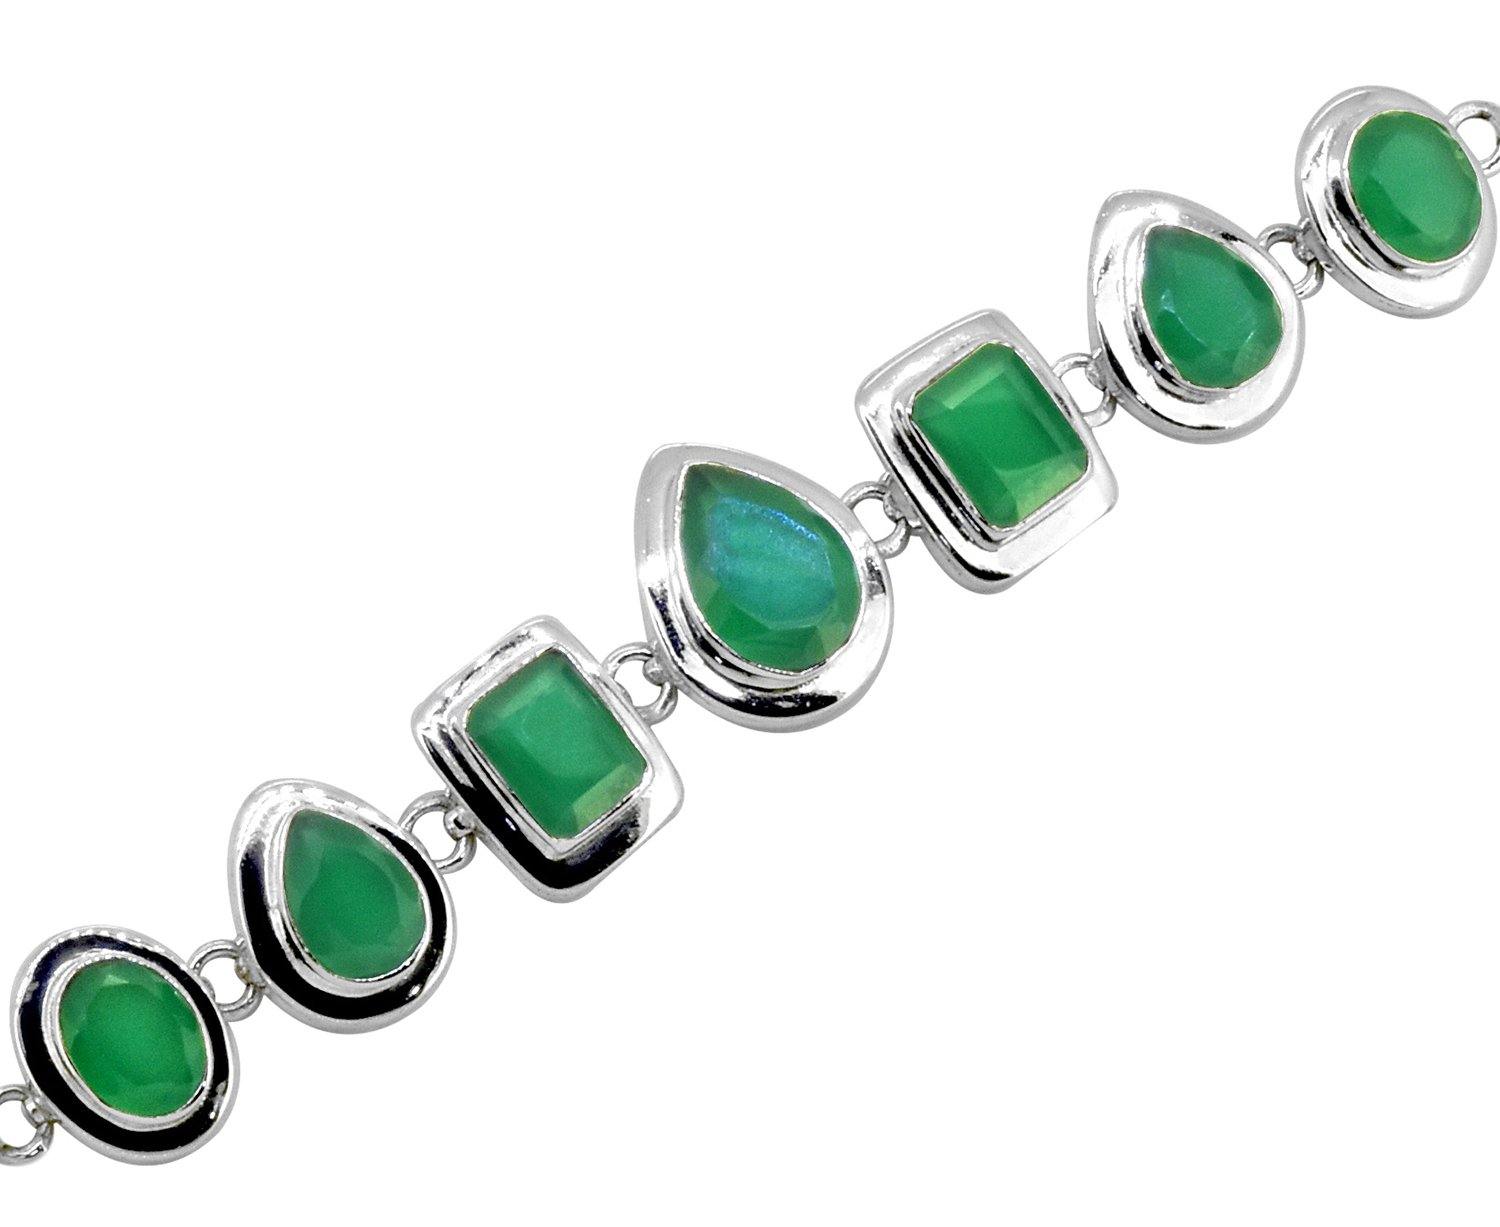 Green Onyx Solid 925 Sterling Silver Link Chain Bracelet Jewelry - YoTreasure